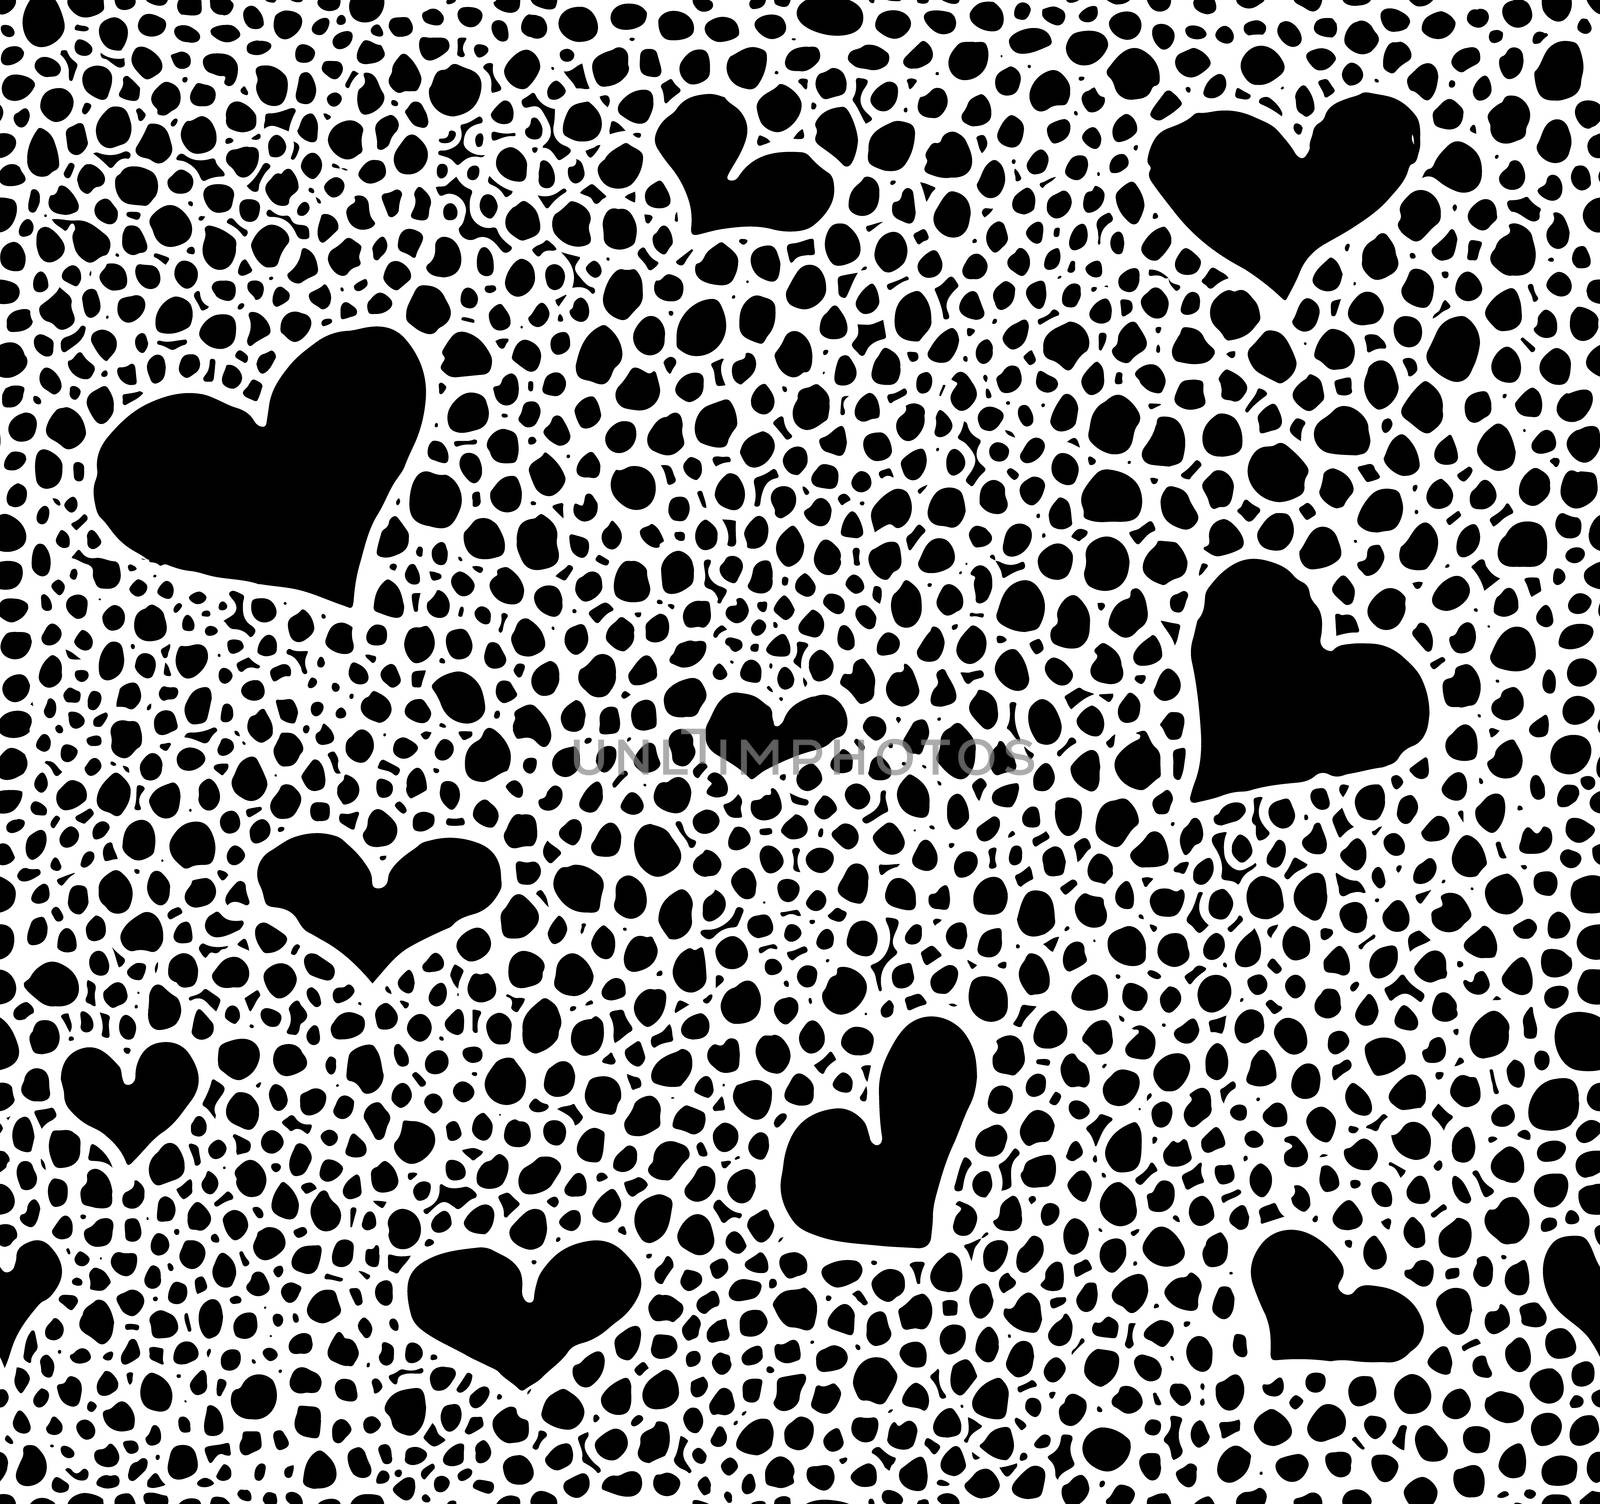 Hand drawn black brush circles and dots seamless pattern, vector illustration.